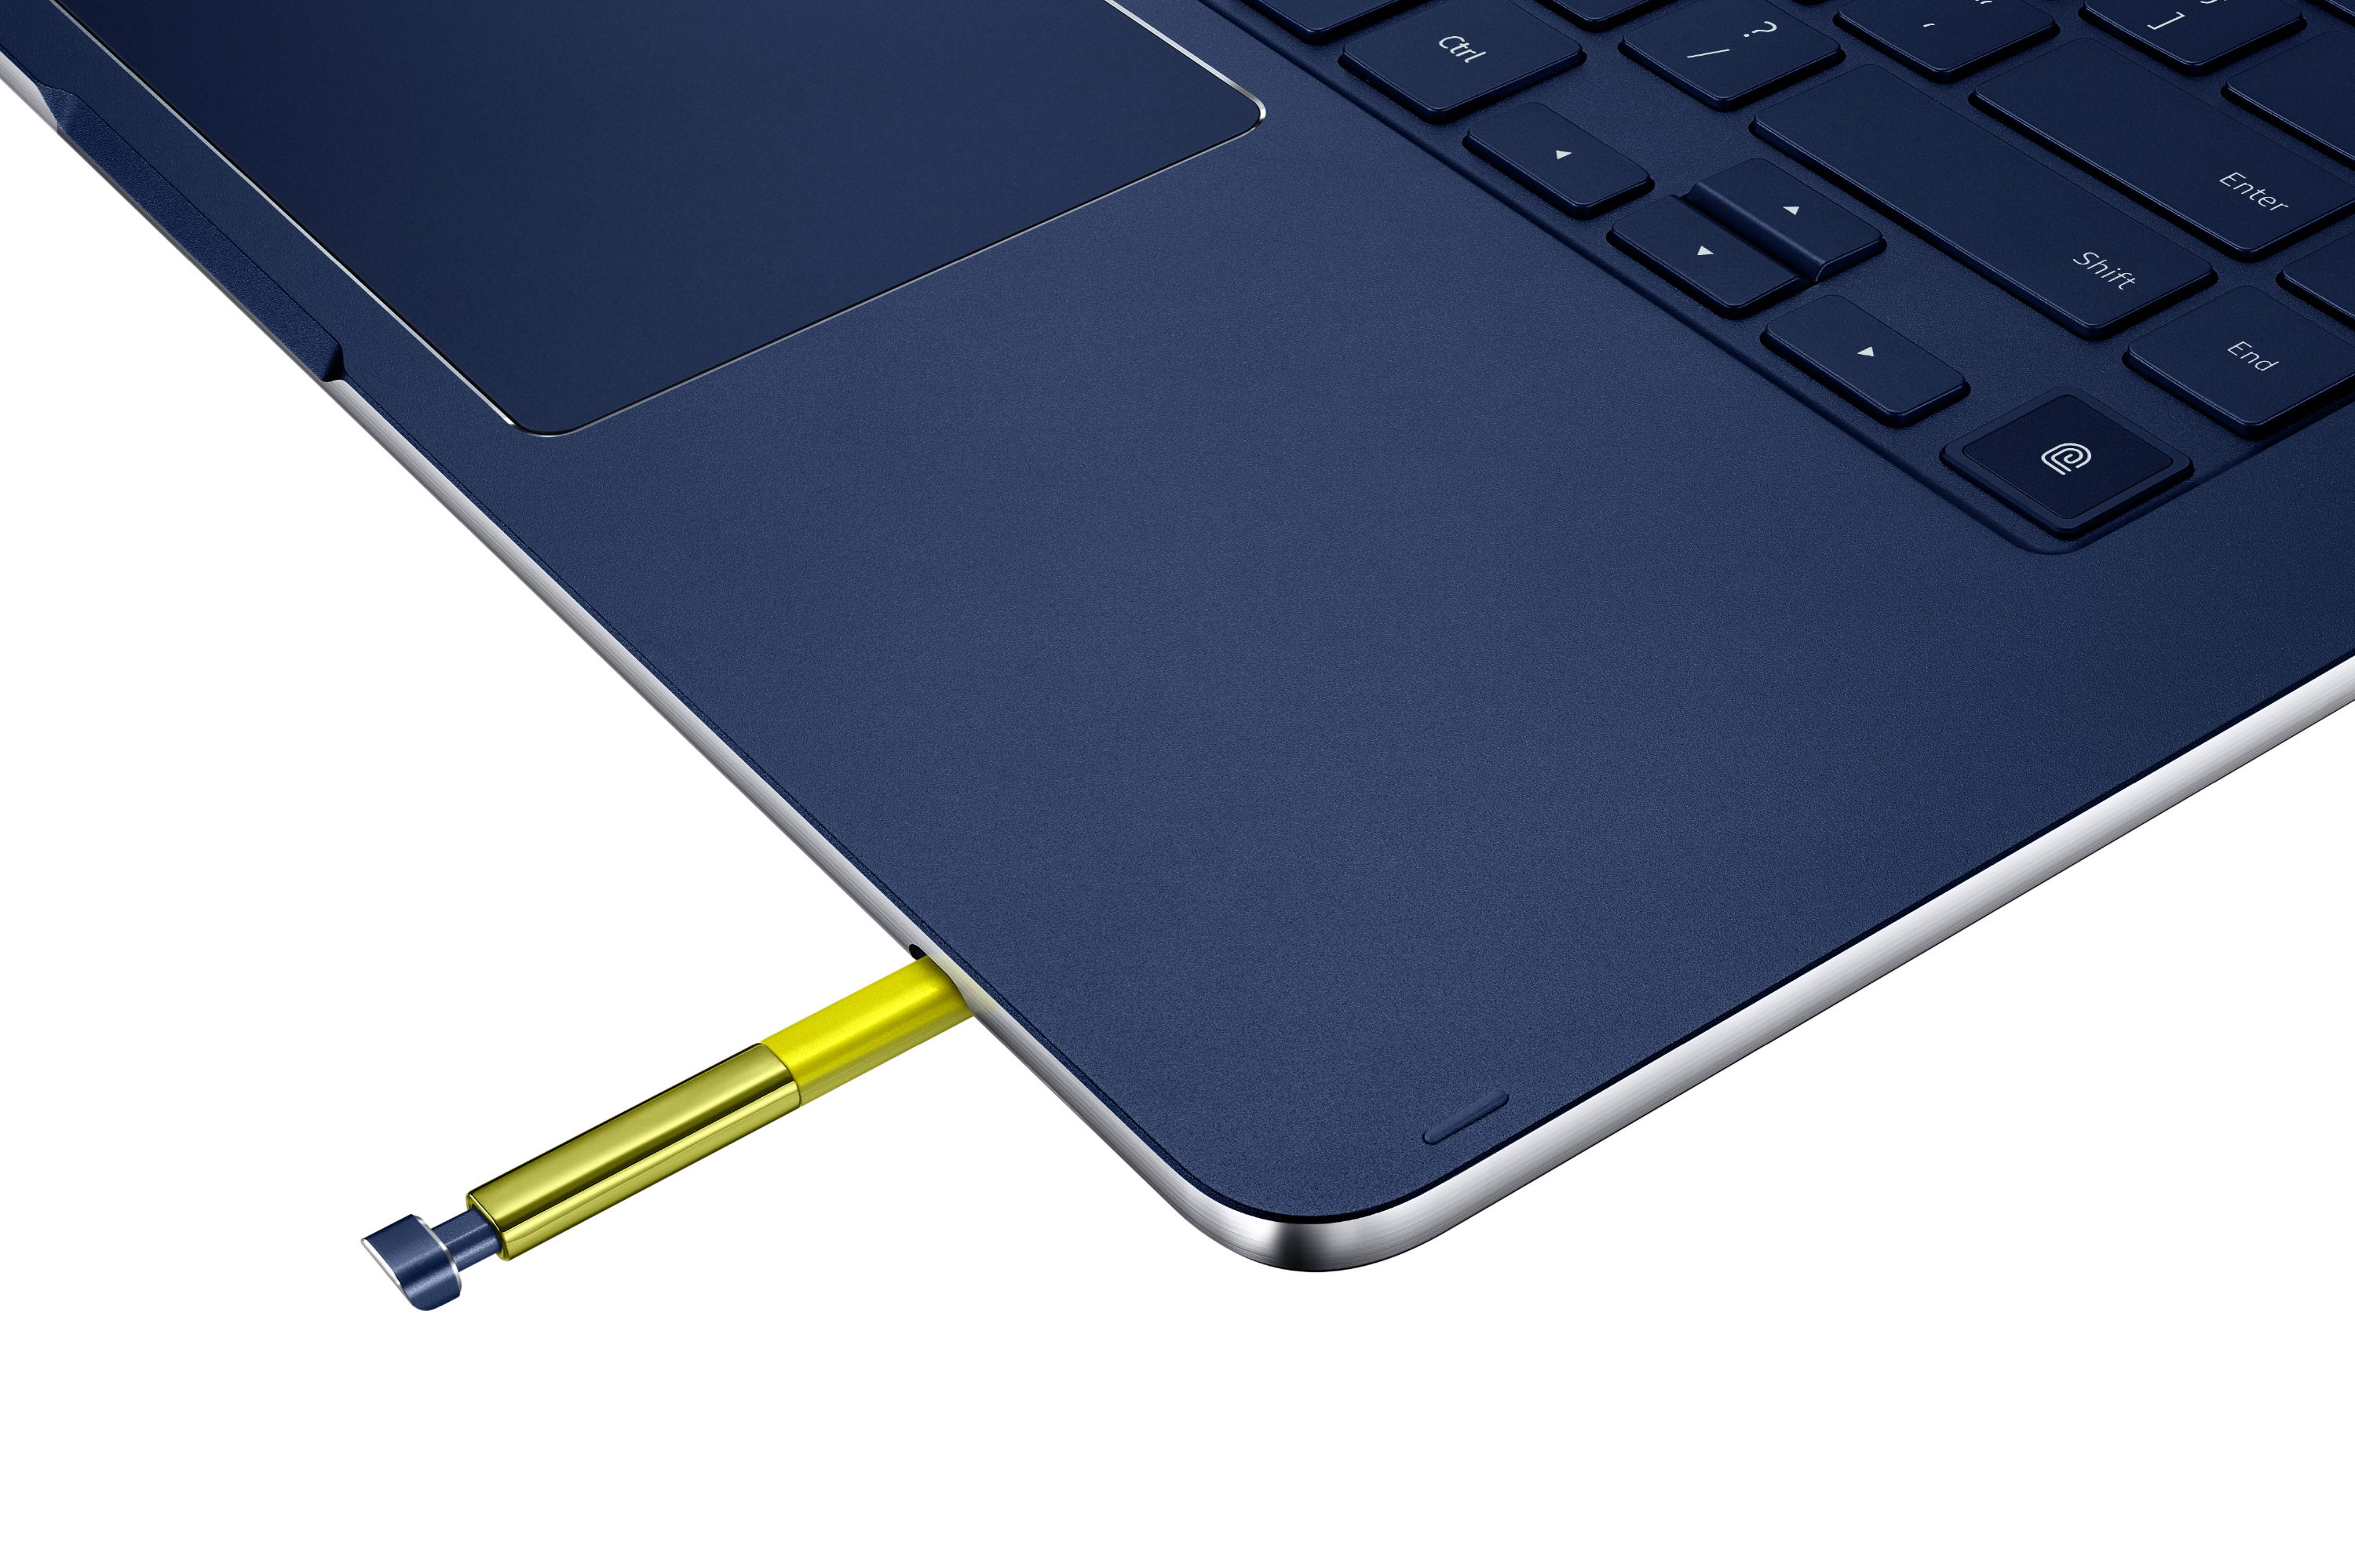 samsung announces notebook 9 pen pr nt950sbe 006 s close up blue